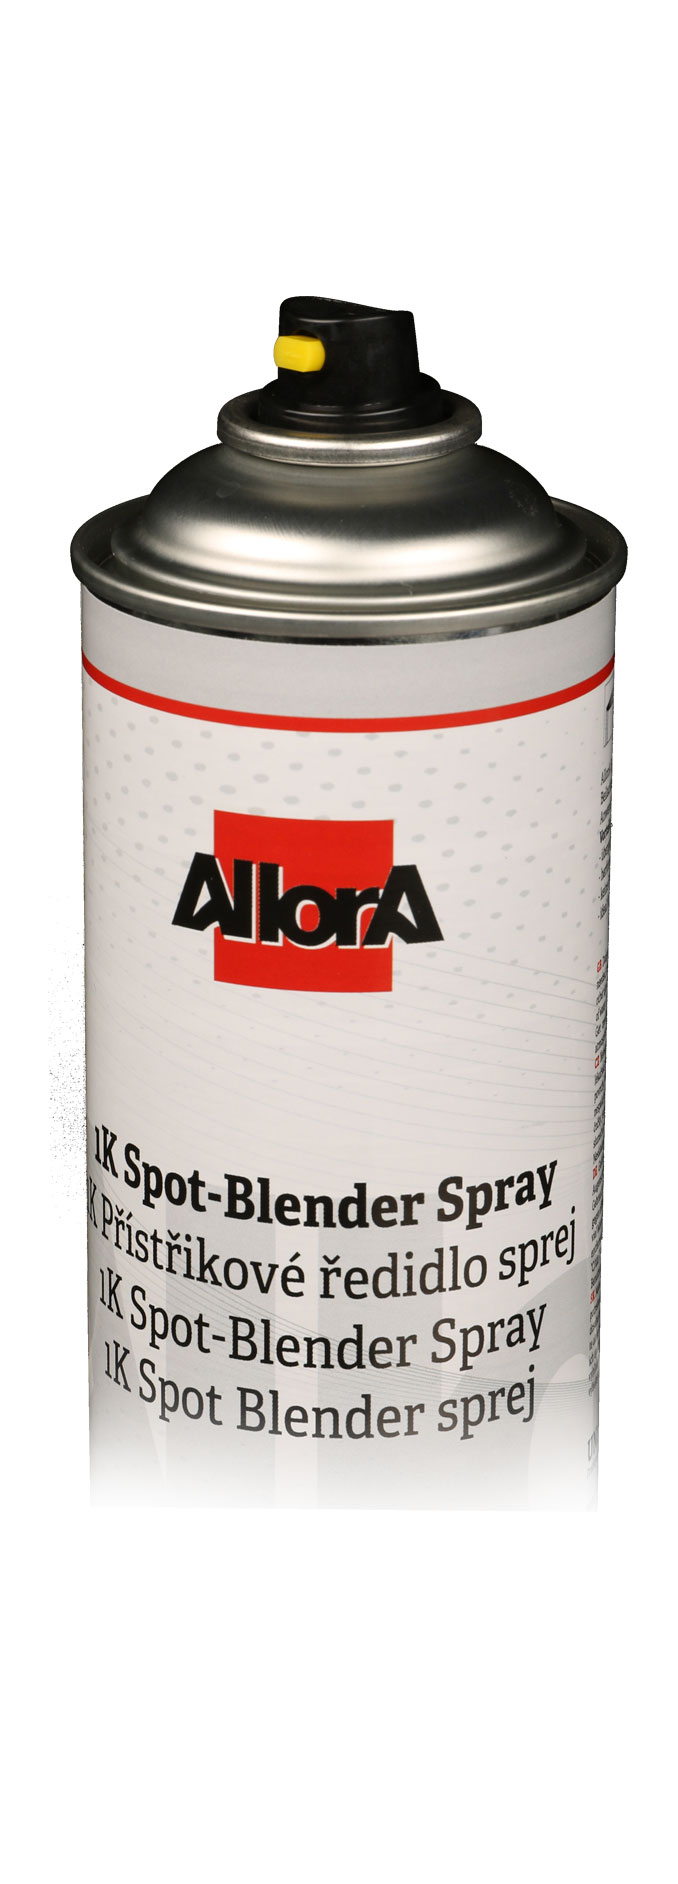 AllorA 1K Spot-Blender Spray für Spot-Repair